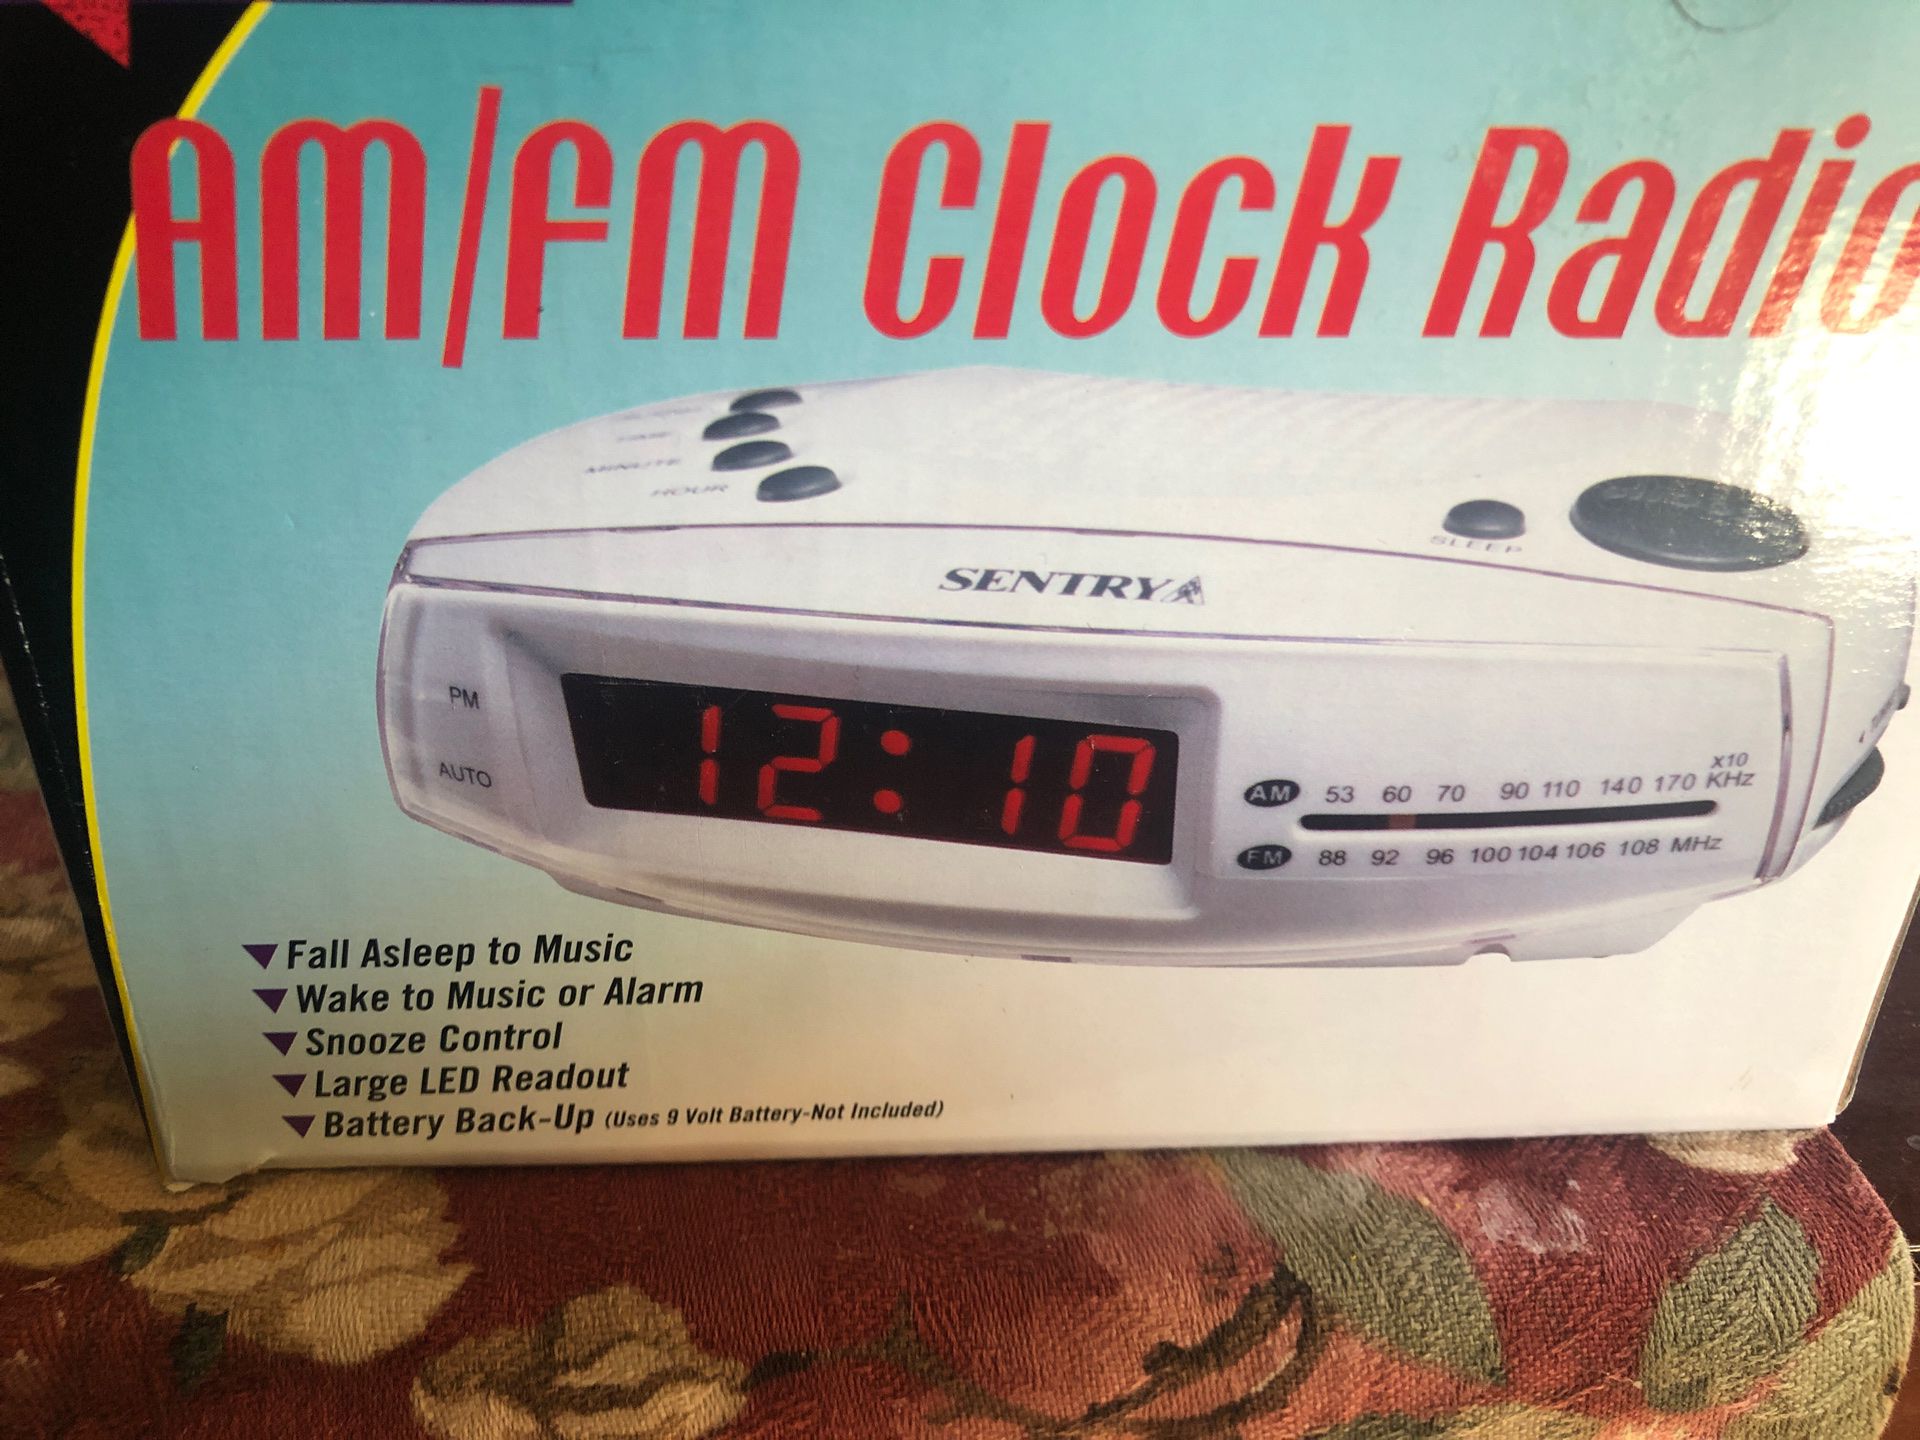 Very cute brand new in box never opened alarm clock